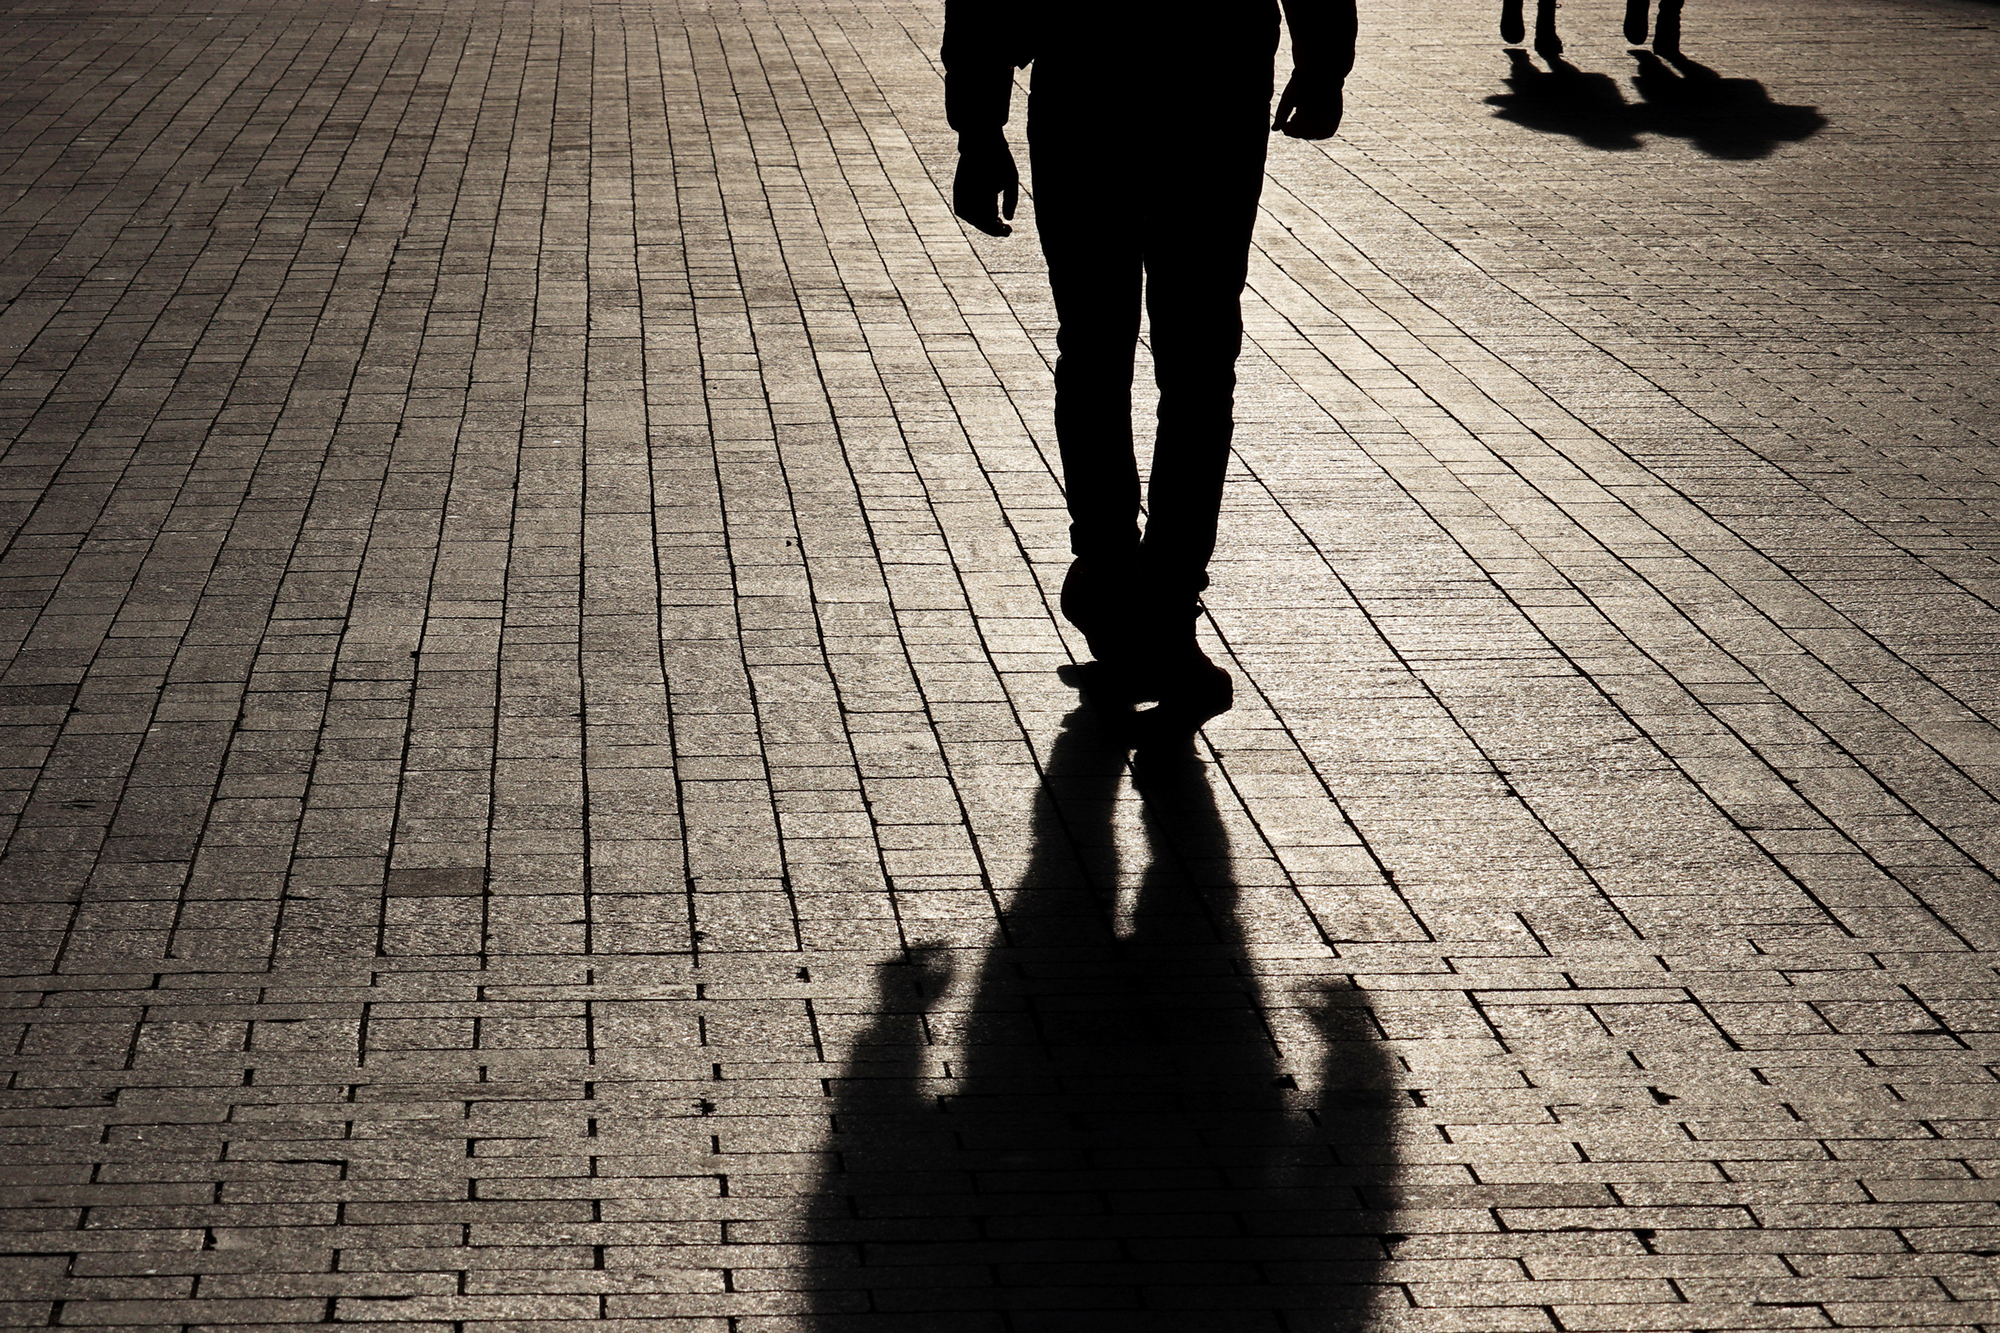 A shadowy figure walking away on a brick street. 